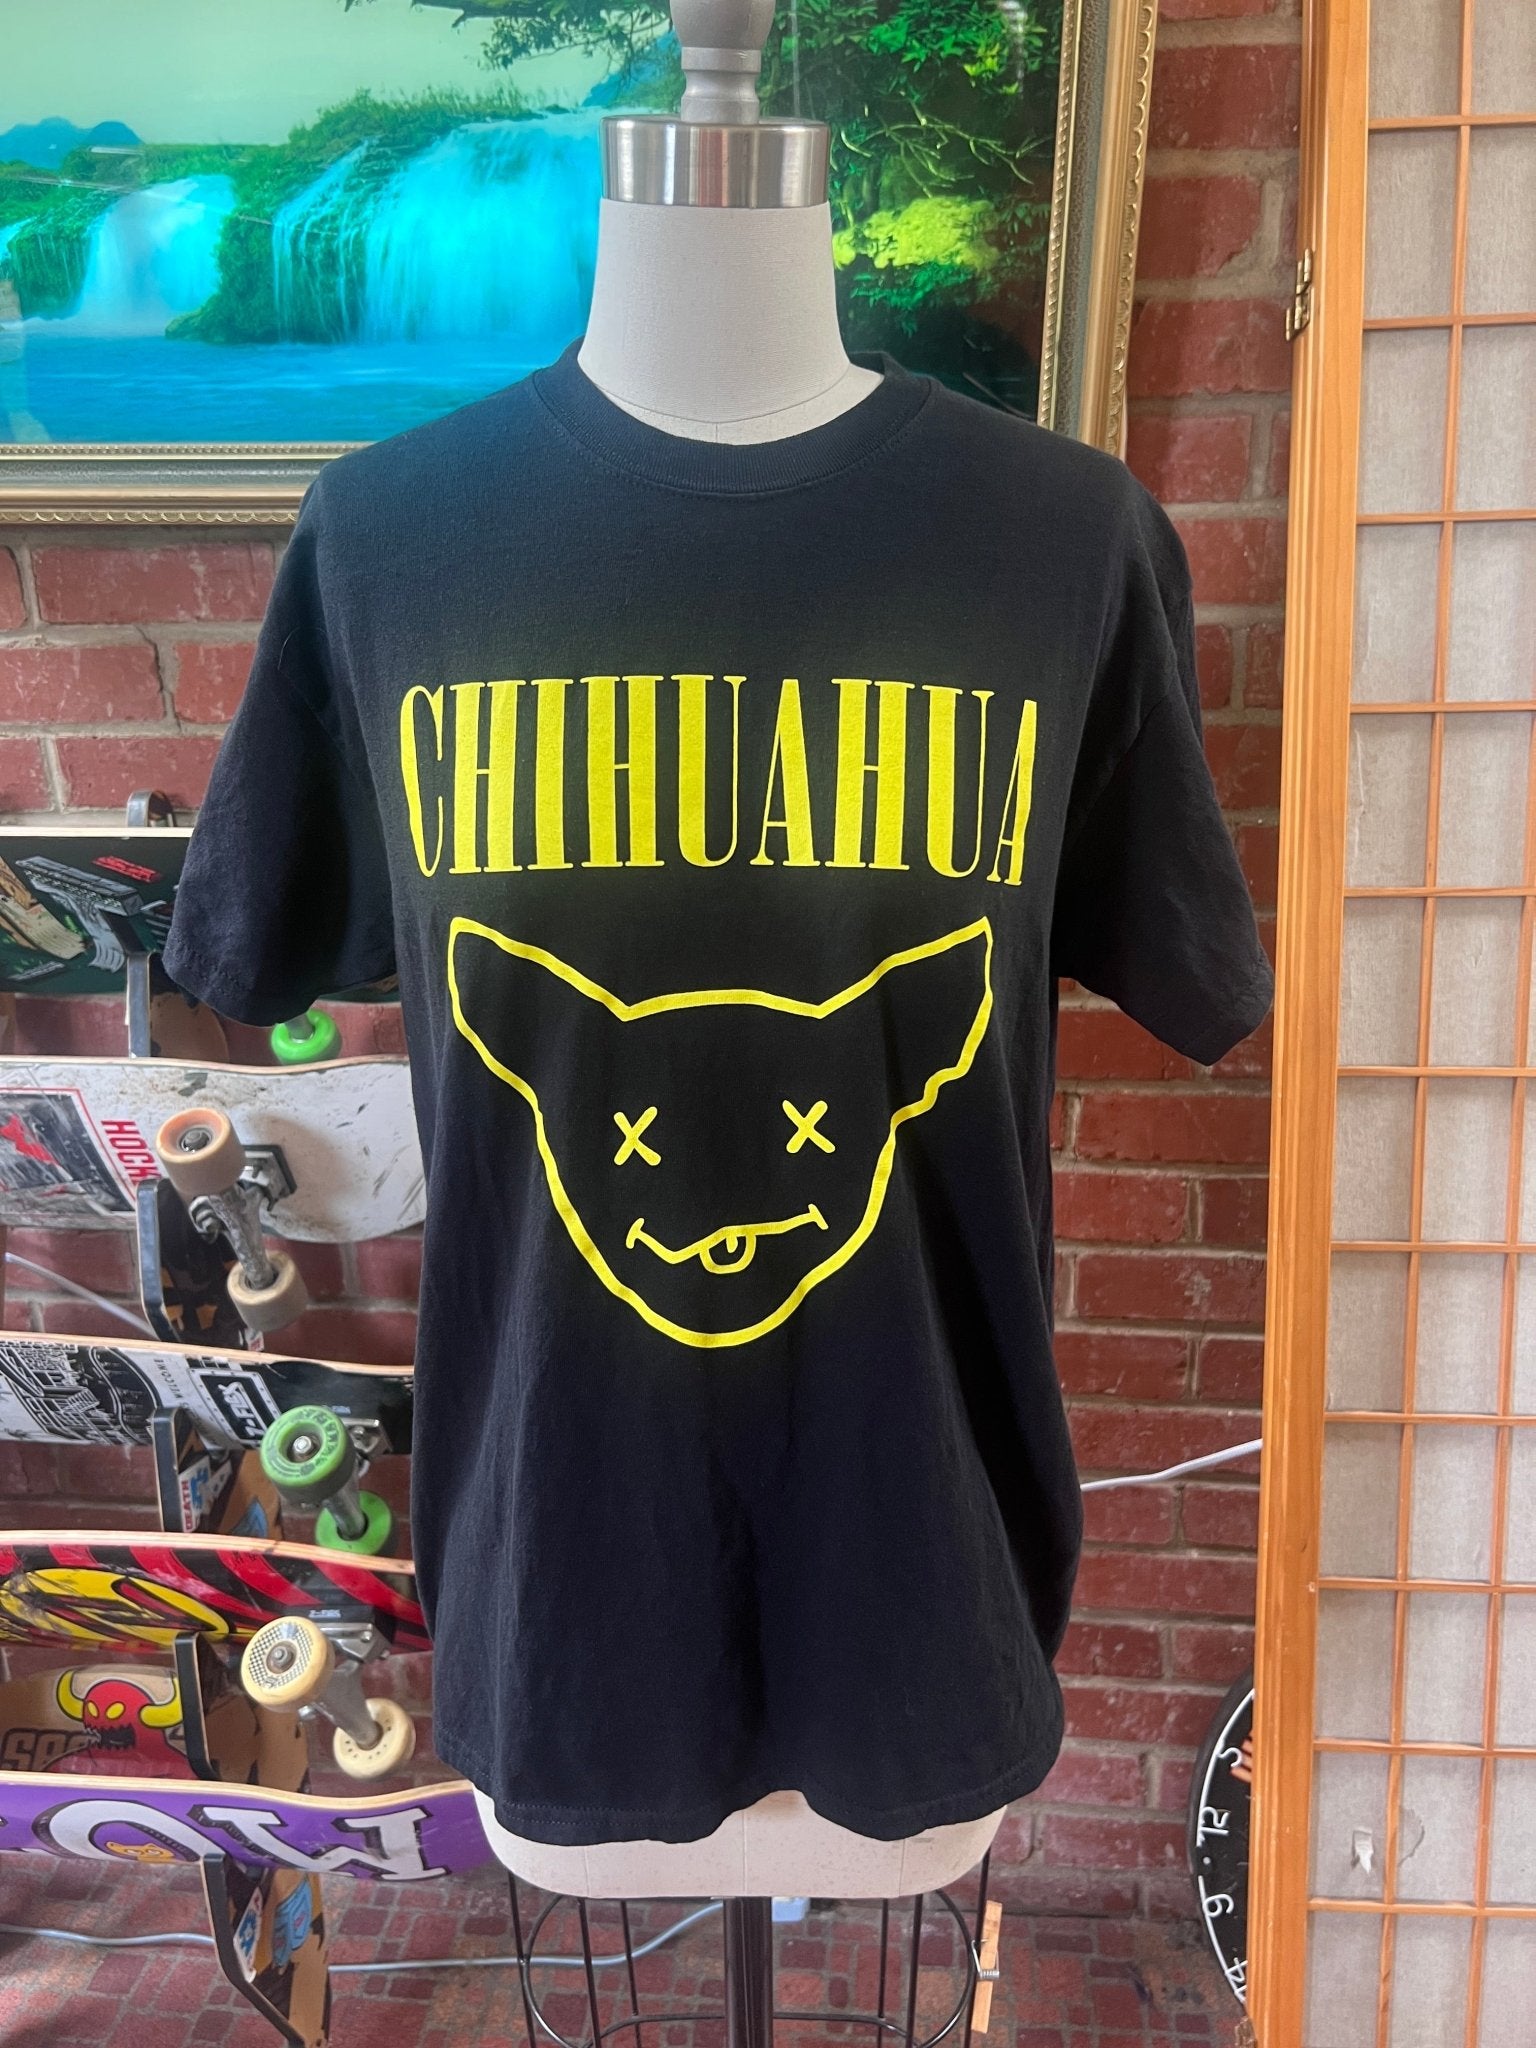 SMELLS LIKE CHIHUAHUA T-SHIRT - BIGFOOT MAGAZINE - T-Shirt